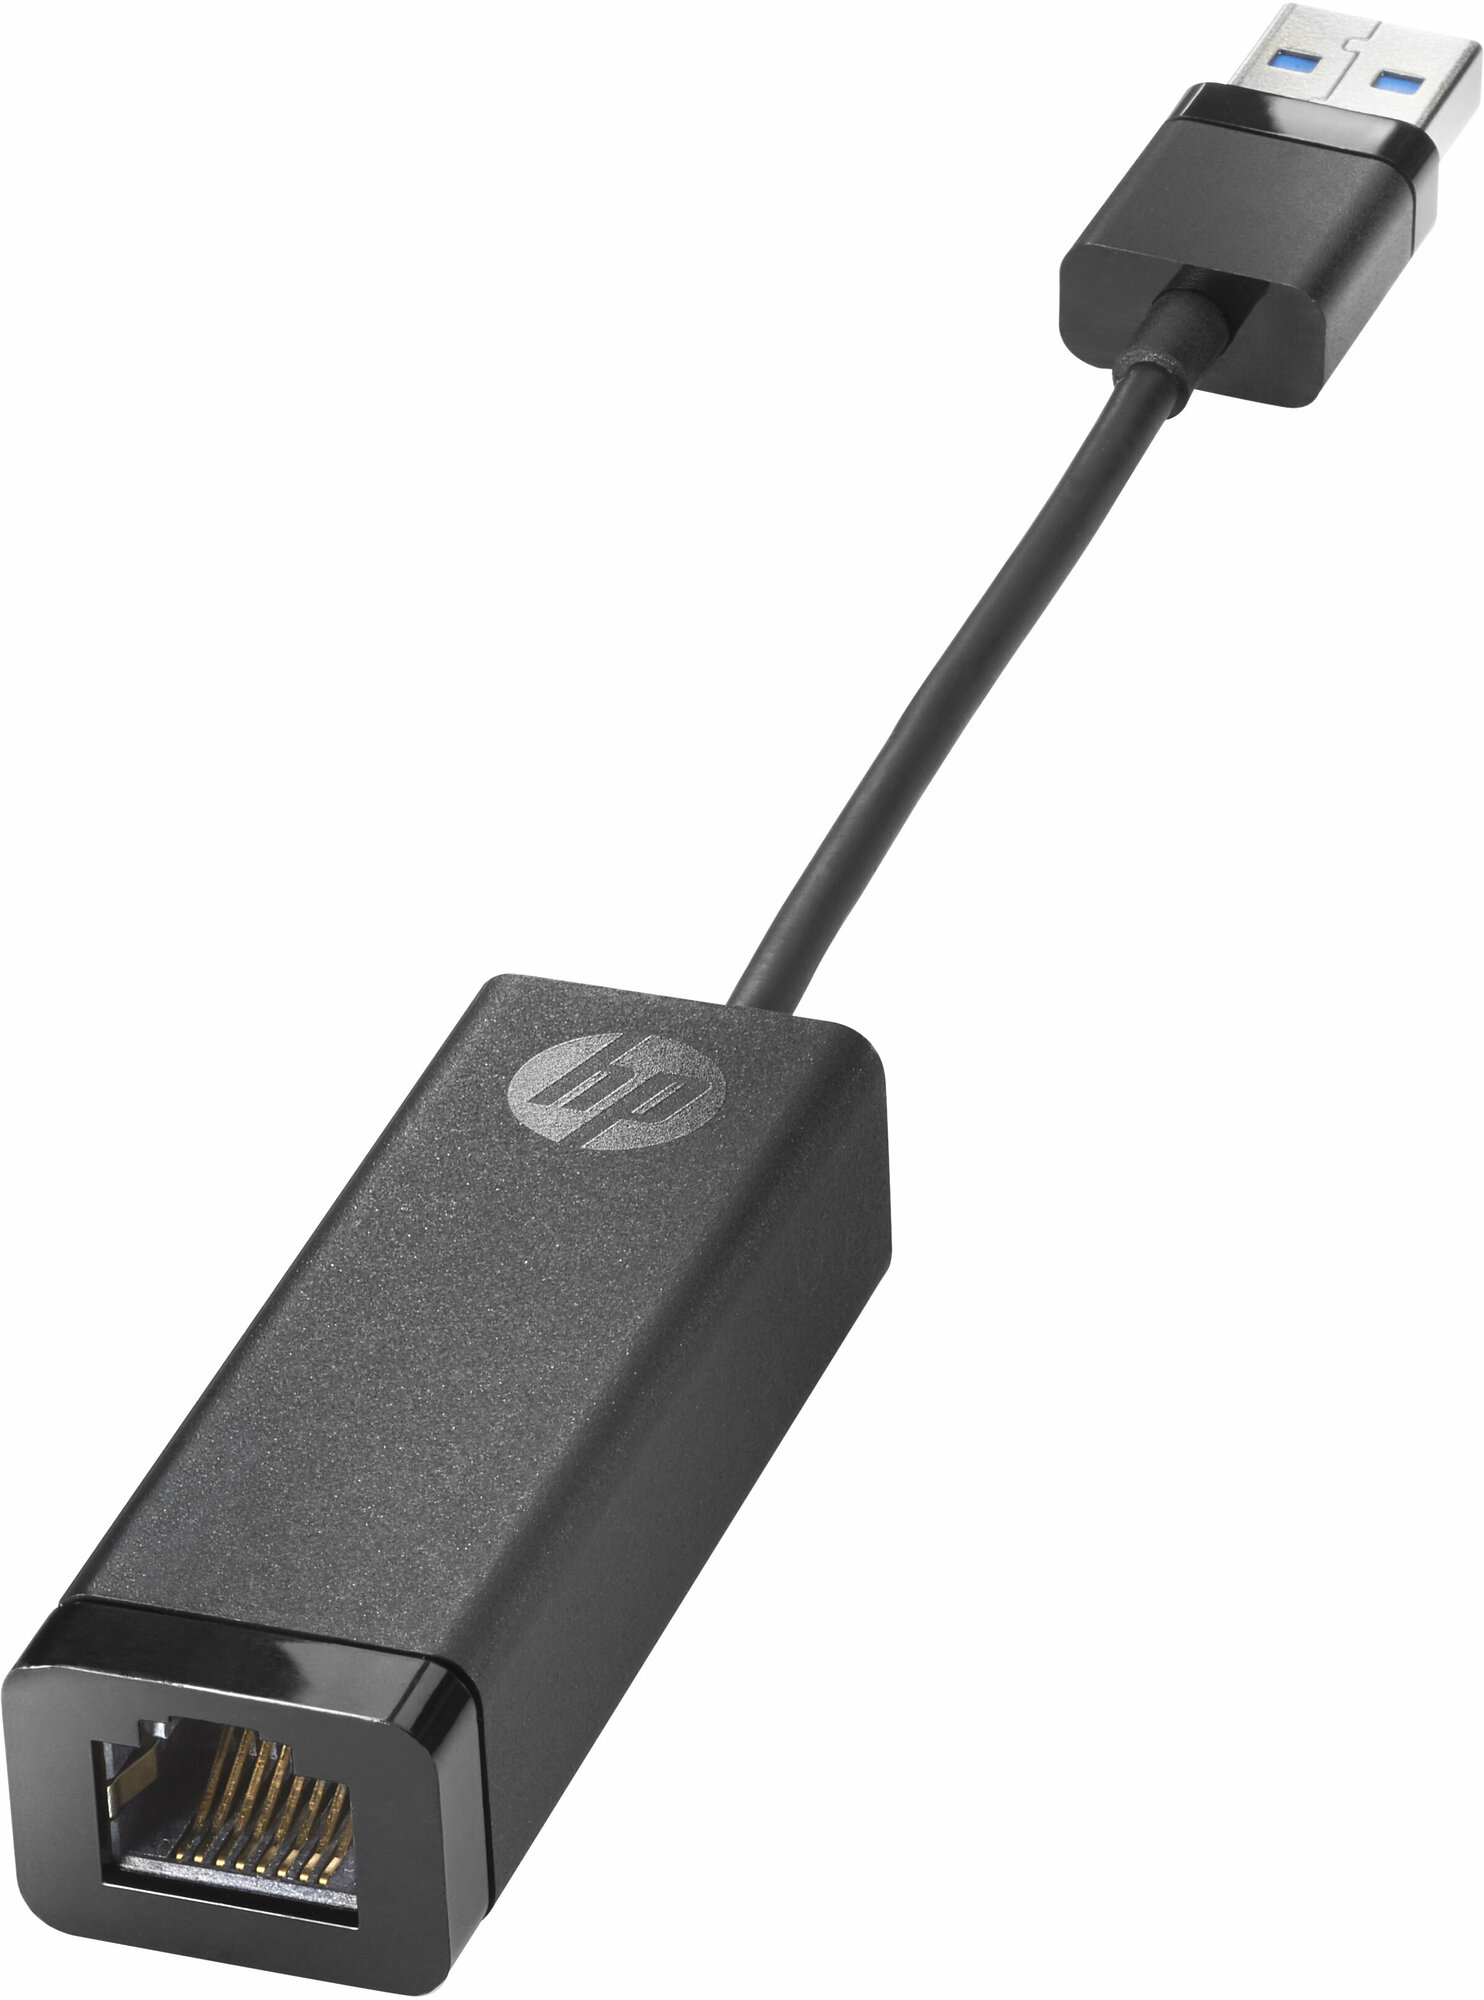 HP USB 3.0 to Gigabit Adapter No localization